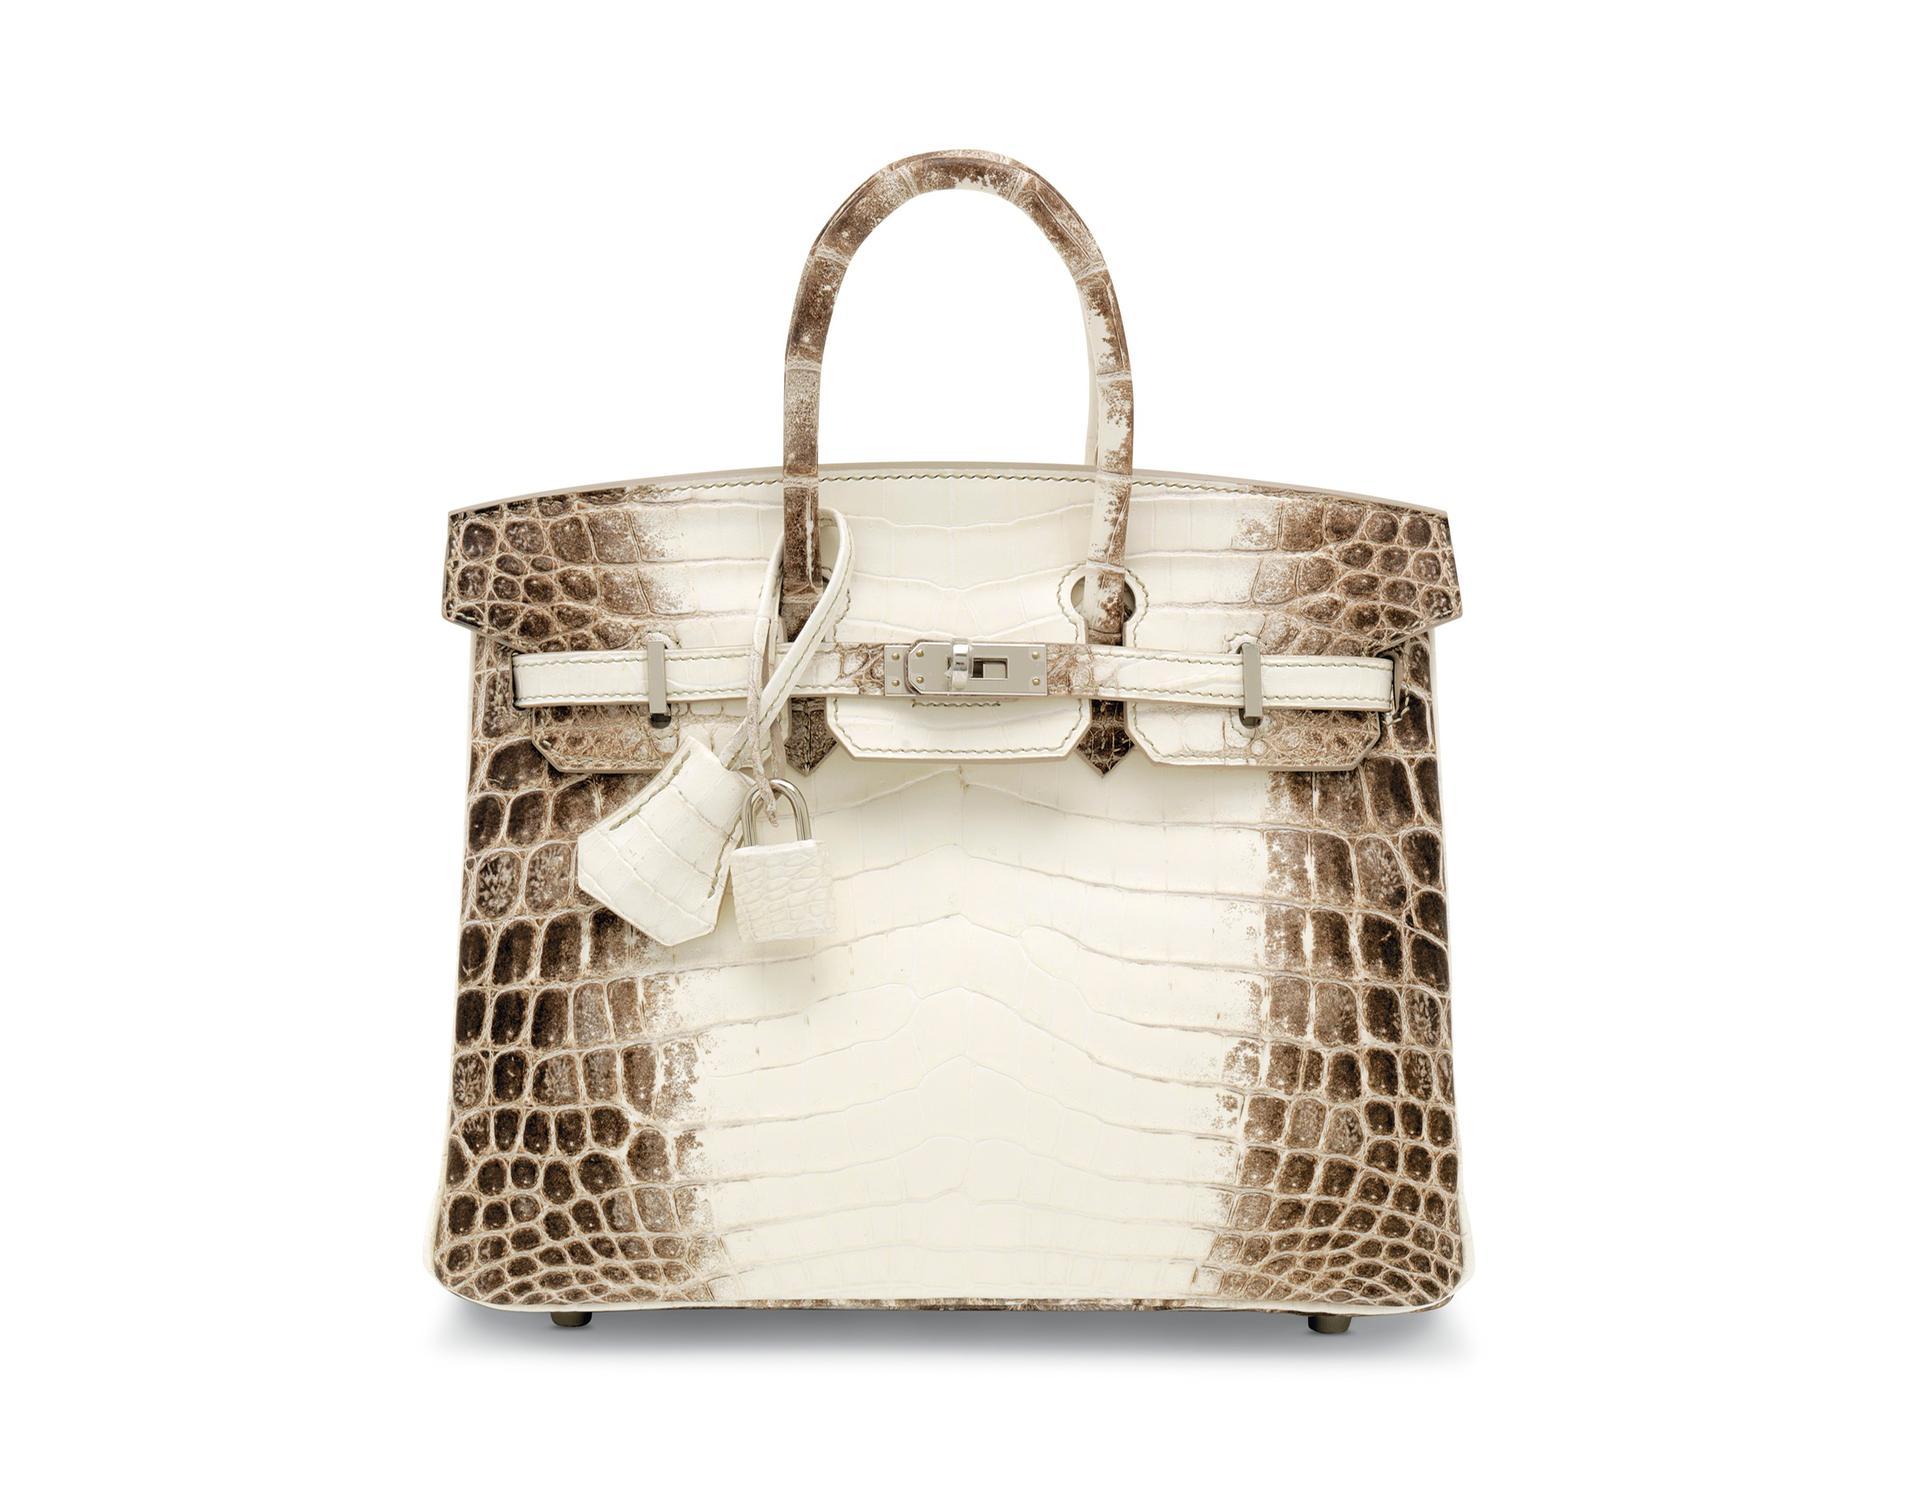 Making a Custom Louis Vuitton Hermes Birkin Bag 